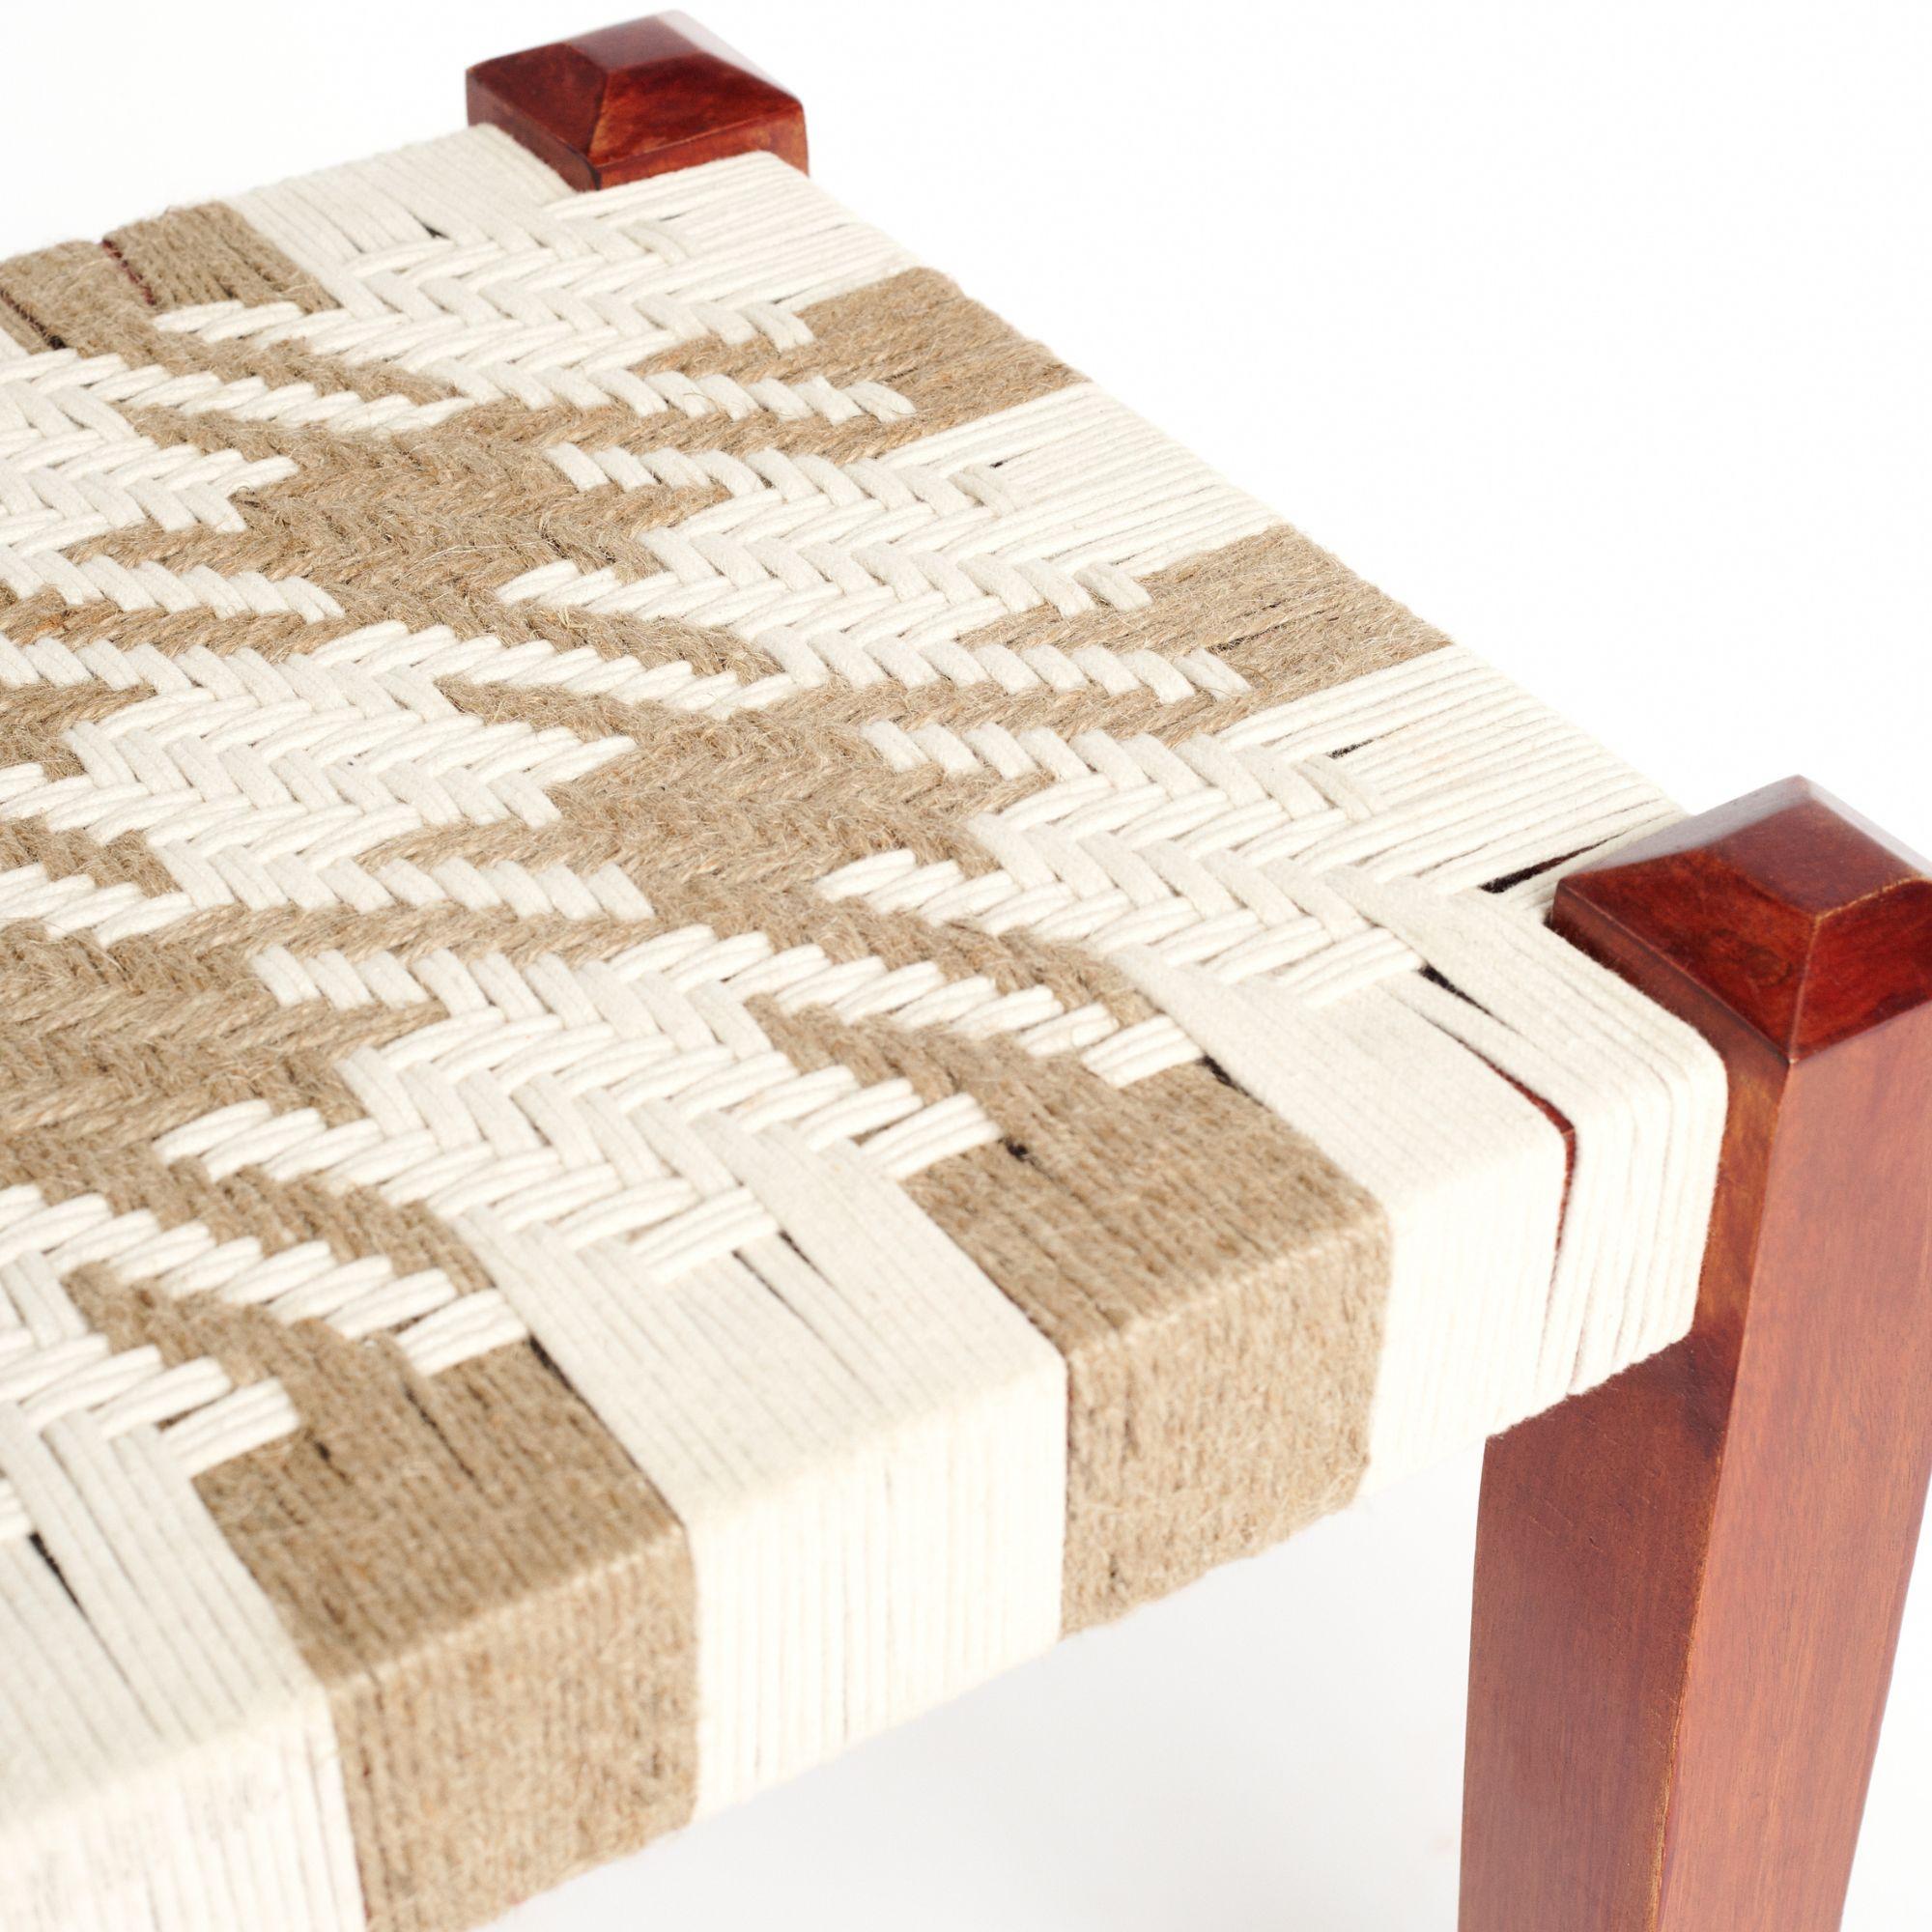 Organic Modern Ālambh Sand Stool Handwoven in Cotton & Jute by Artisans For Sale